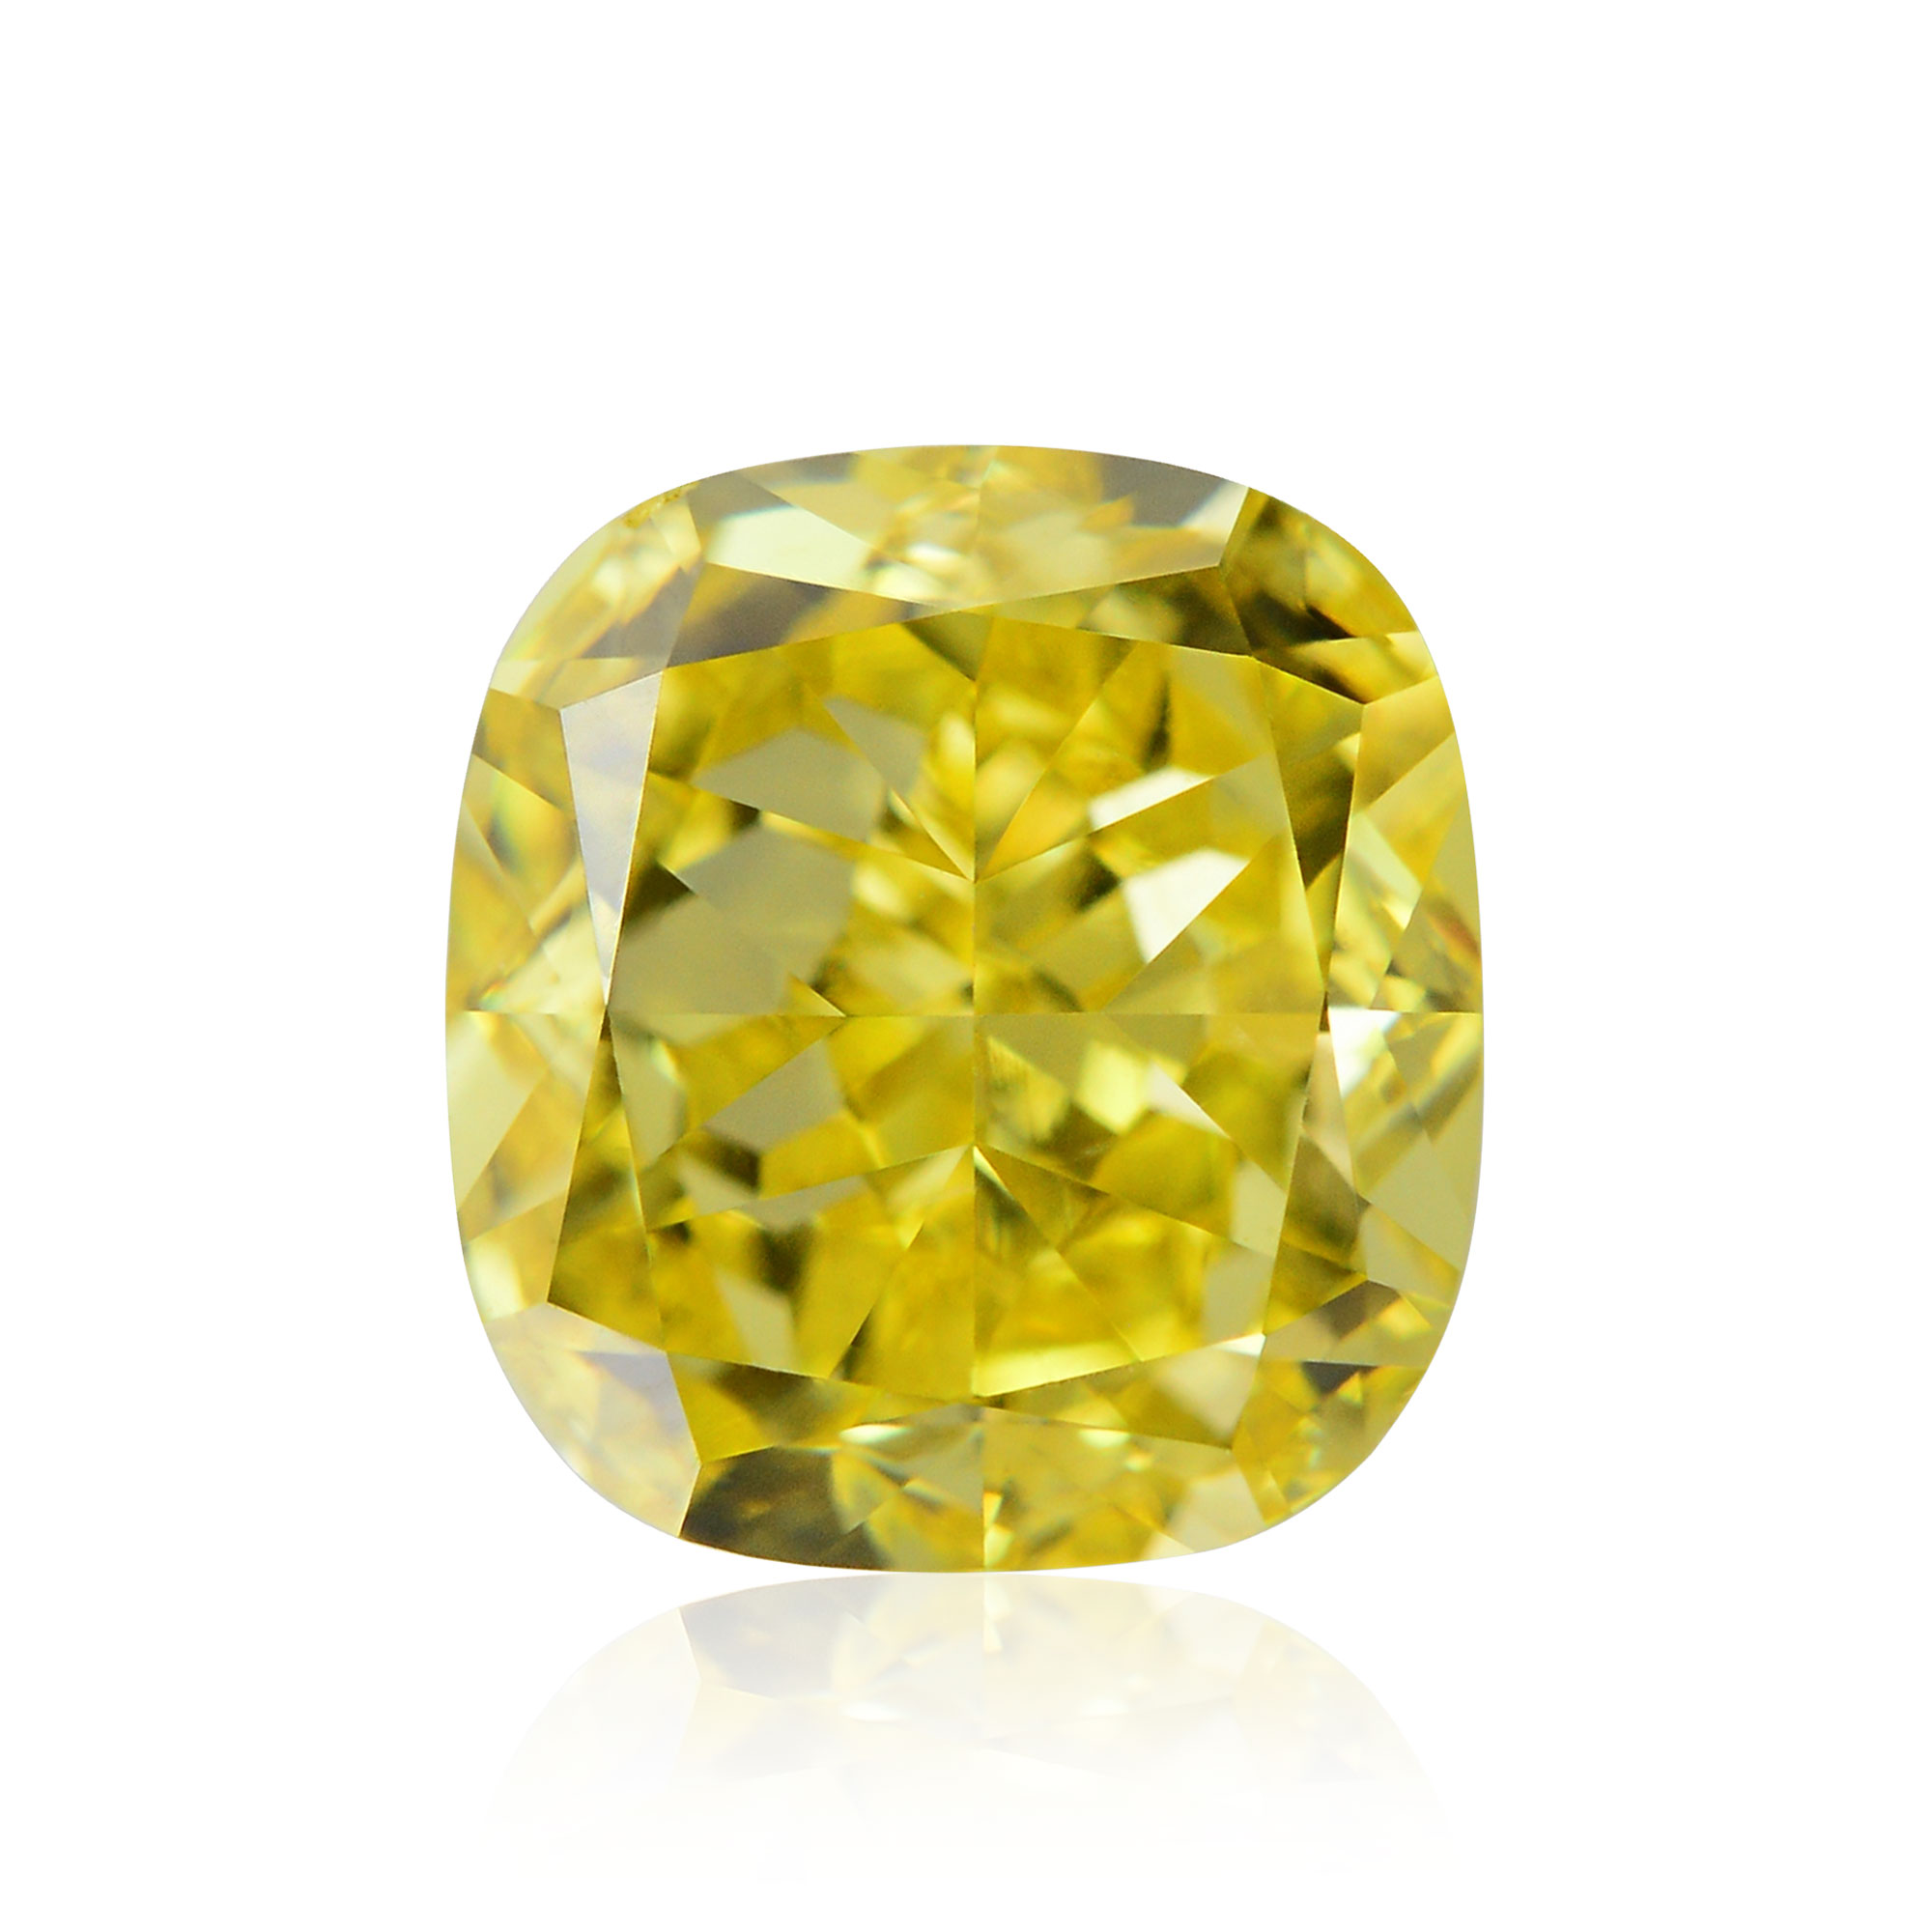 1.09 carat, Fancy Vivid Yellow Diamond, Cushion Shape, VS2 Clarity, GIA,  SKU 306441